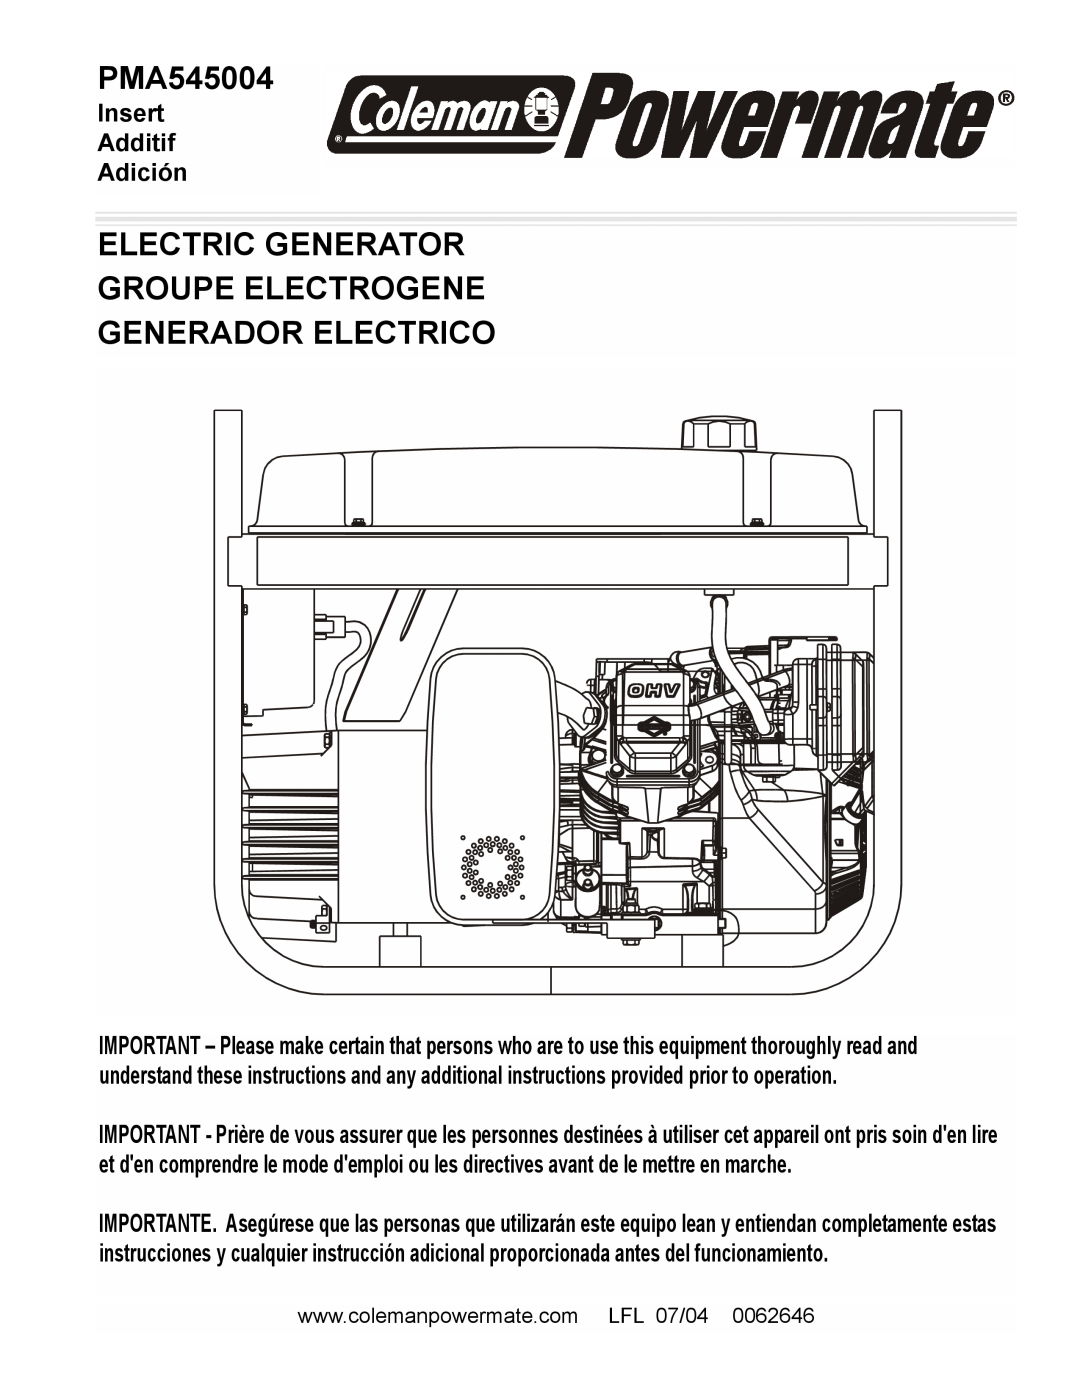 Powermate PMA545004 manual Electric Generator Groupe Electrogene, Generador Electrico, Insert Additif Adición 